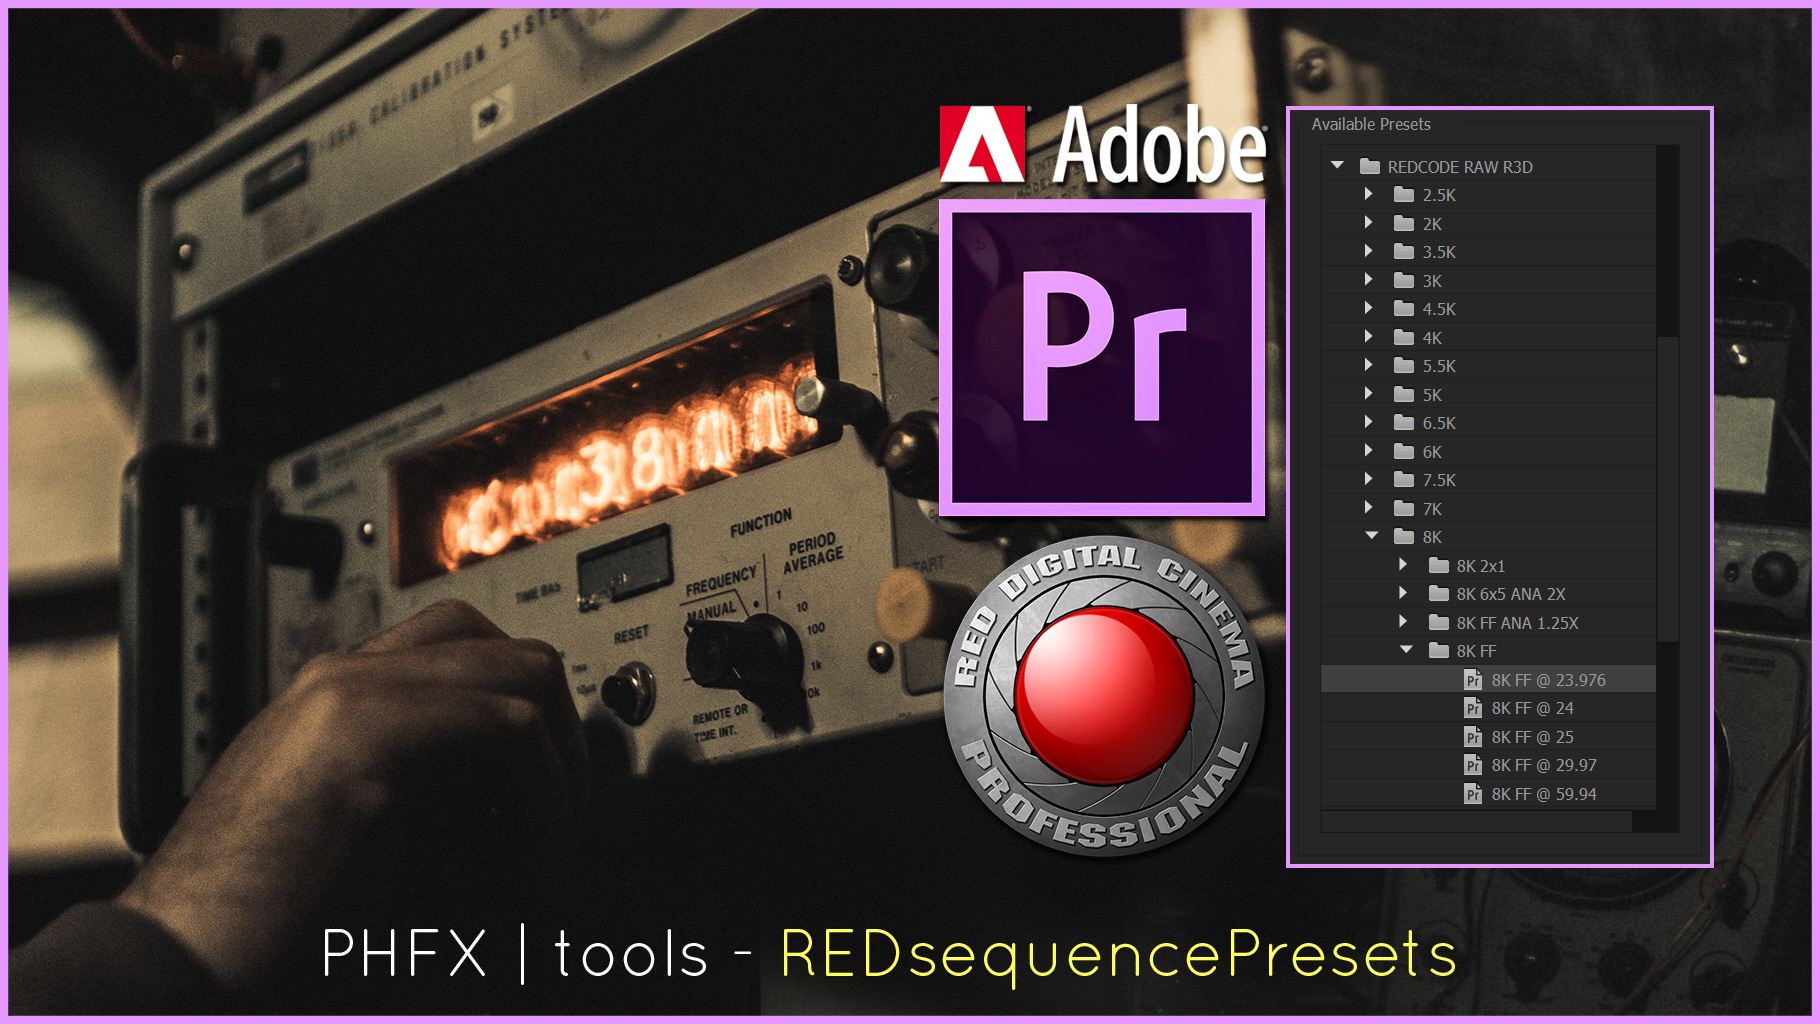 Canopus Xplode Pro 4.60 For Adobe Premiere